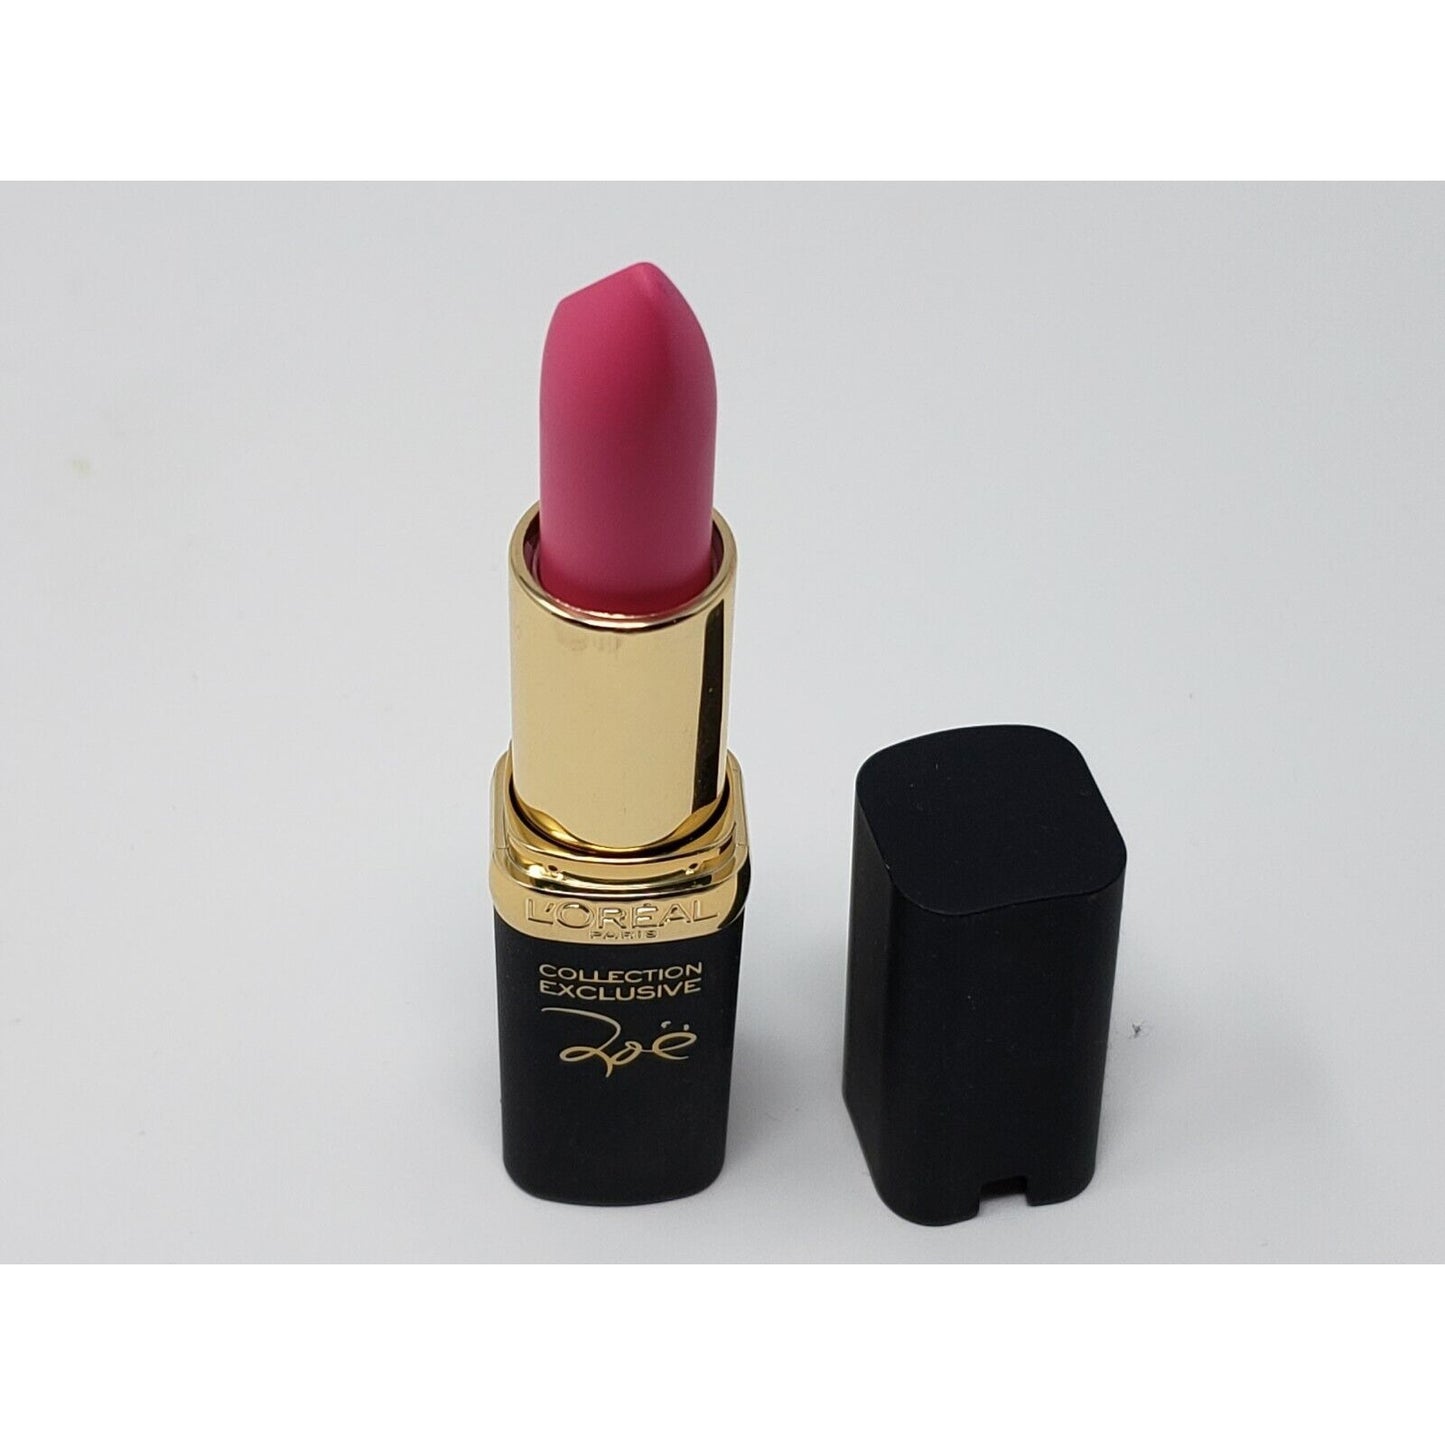 L'oreal 713 Zoe's Pink Collection Exclusive Colour Riche Lipstick